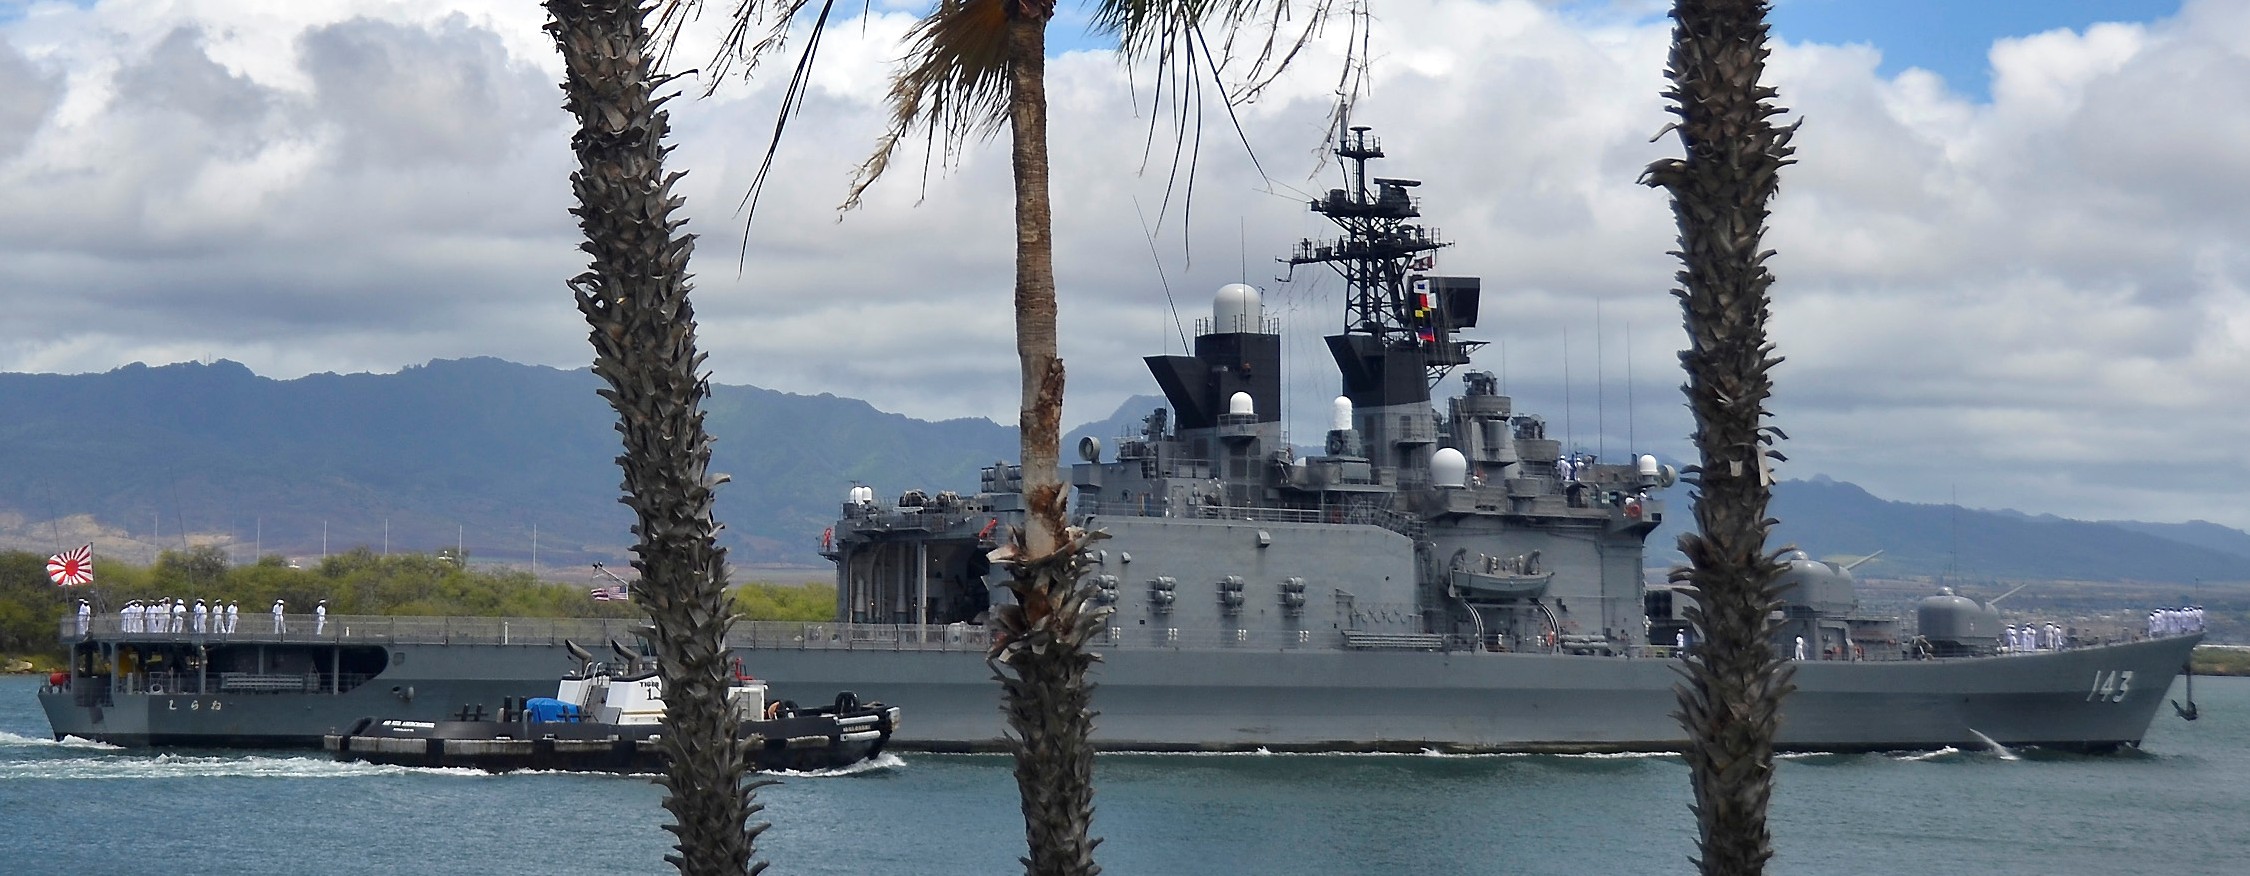 ddh-143 jds shirane helicopter destroyer japan maritime self defense force jmsdf 16 exercise rimpac hawaii